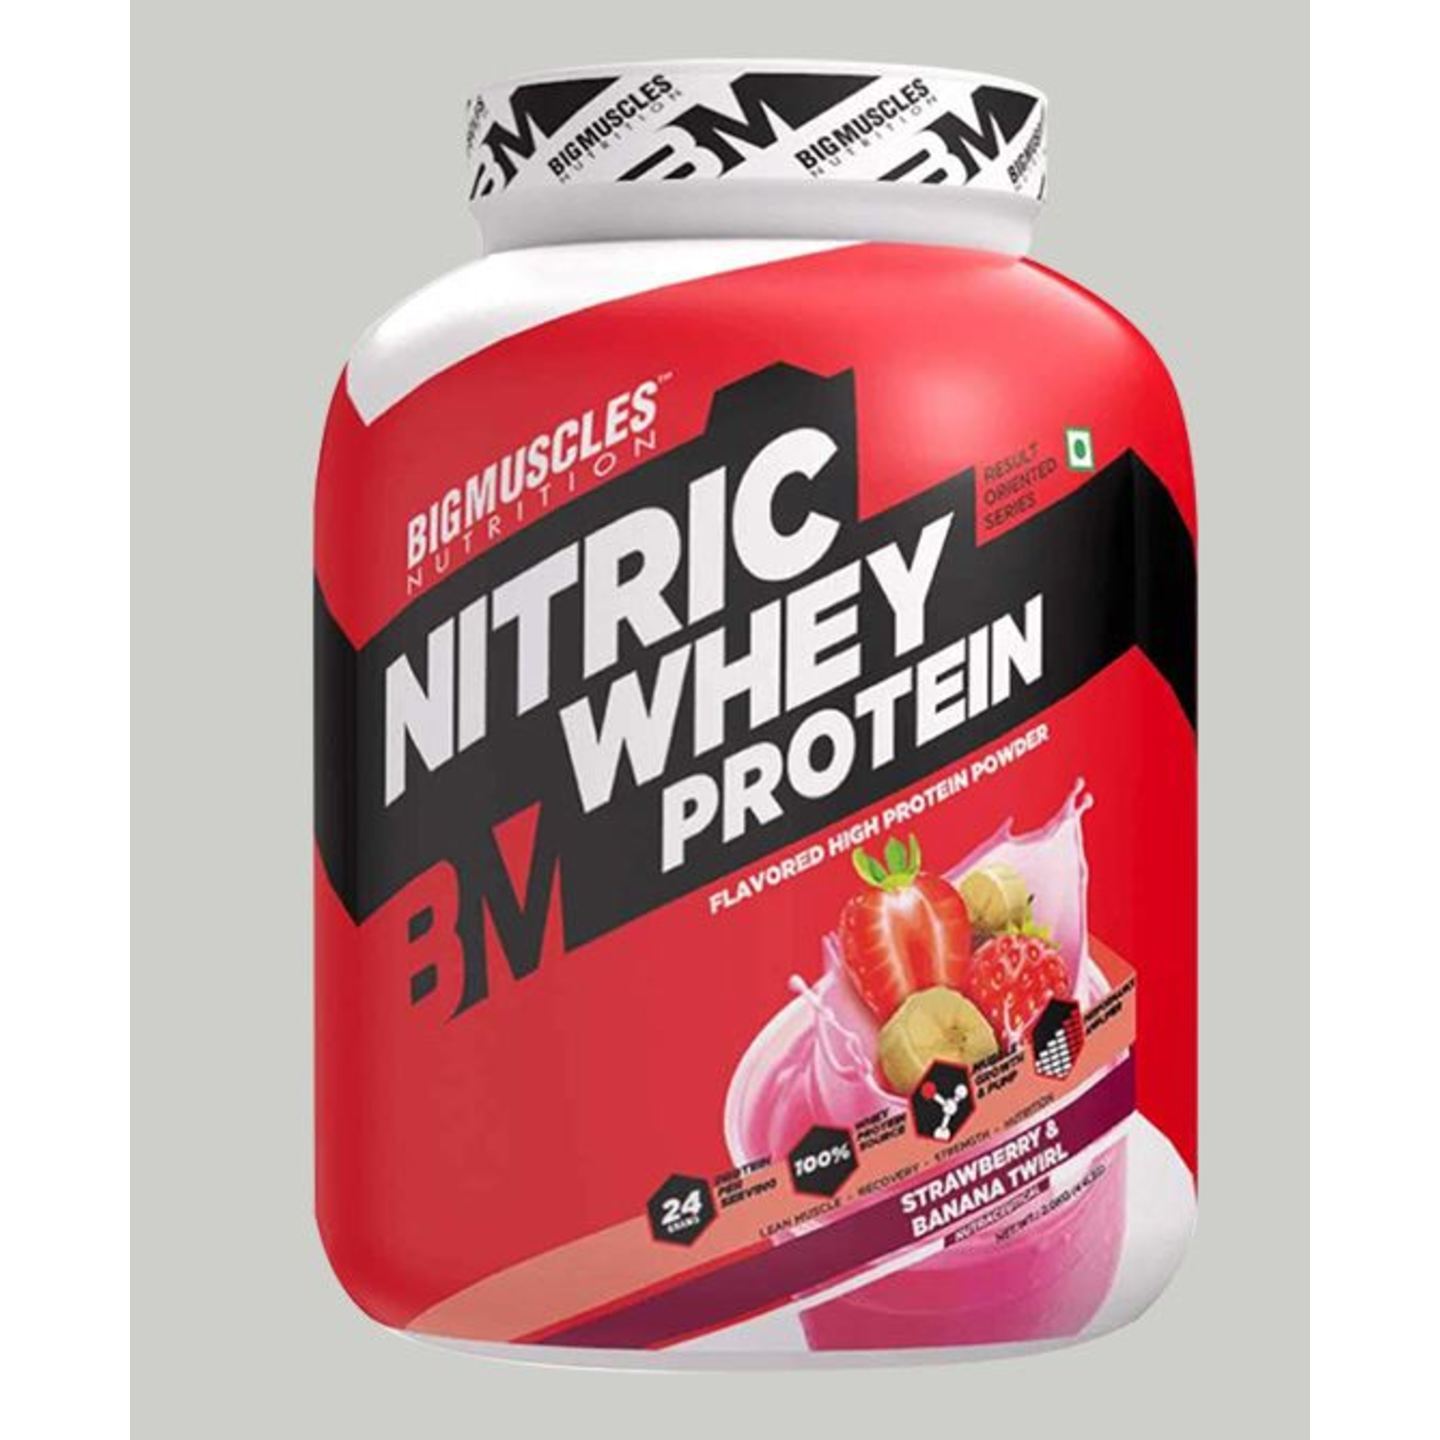 MastMart Bigmuscles Nutrition Nitric Whey Protein Strawberry Banana Twirl 4.4 lbs